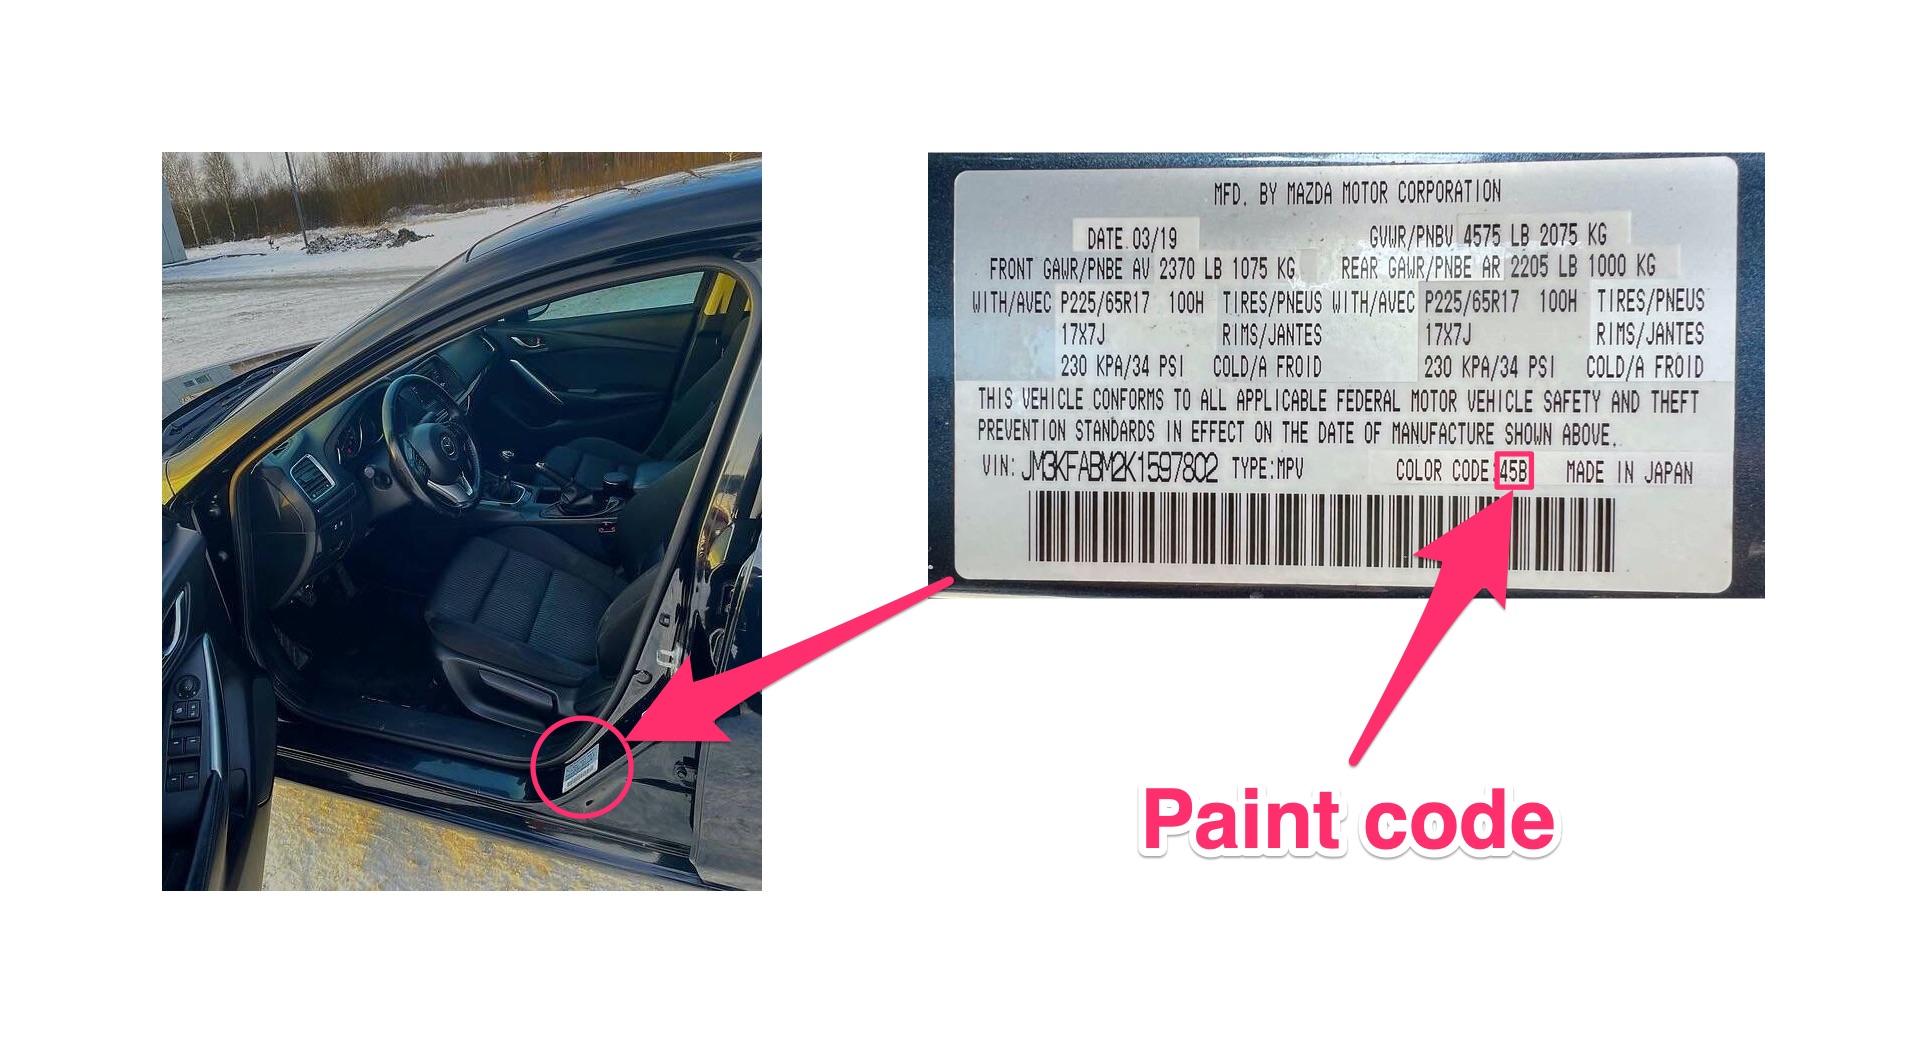 Mazda paint code location on vehicle